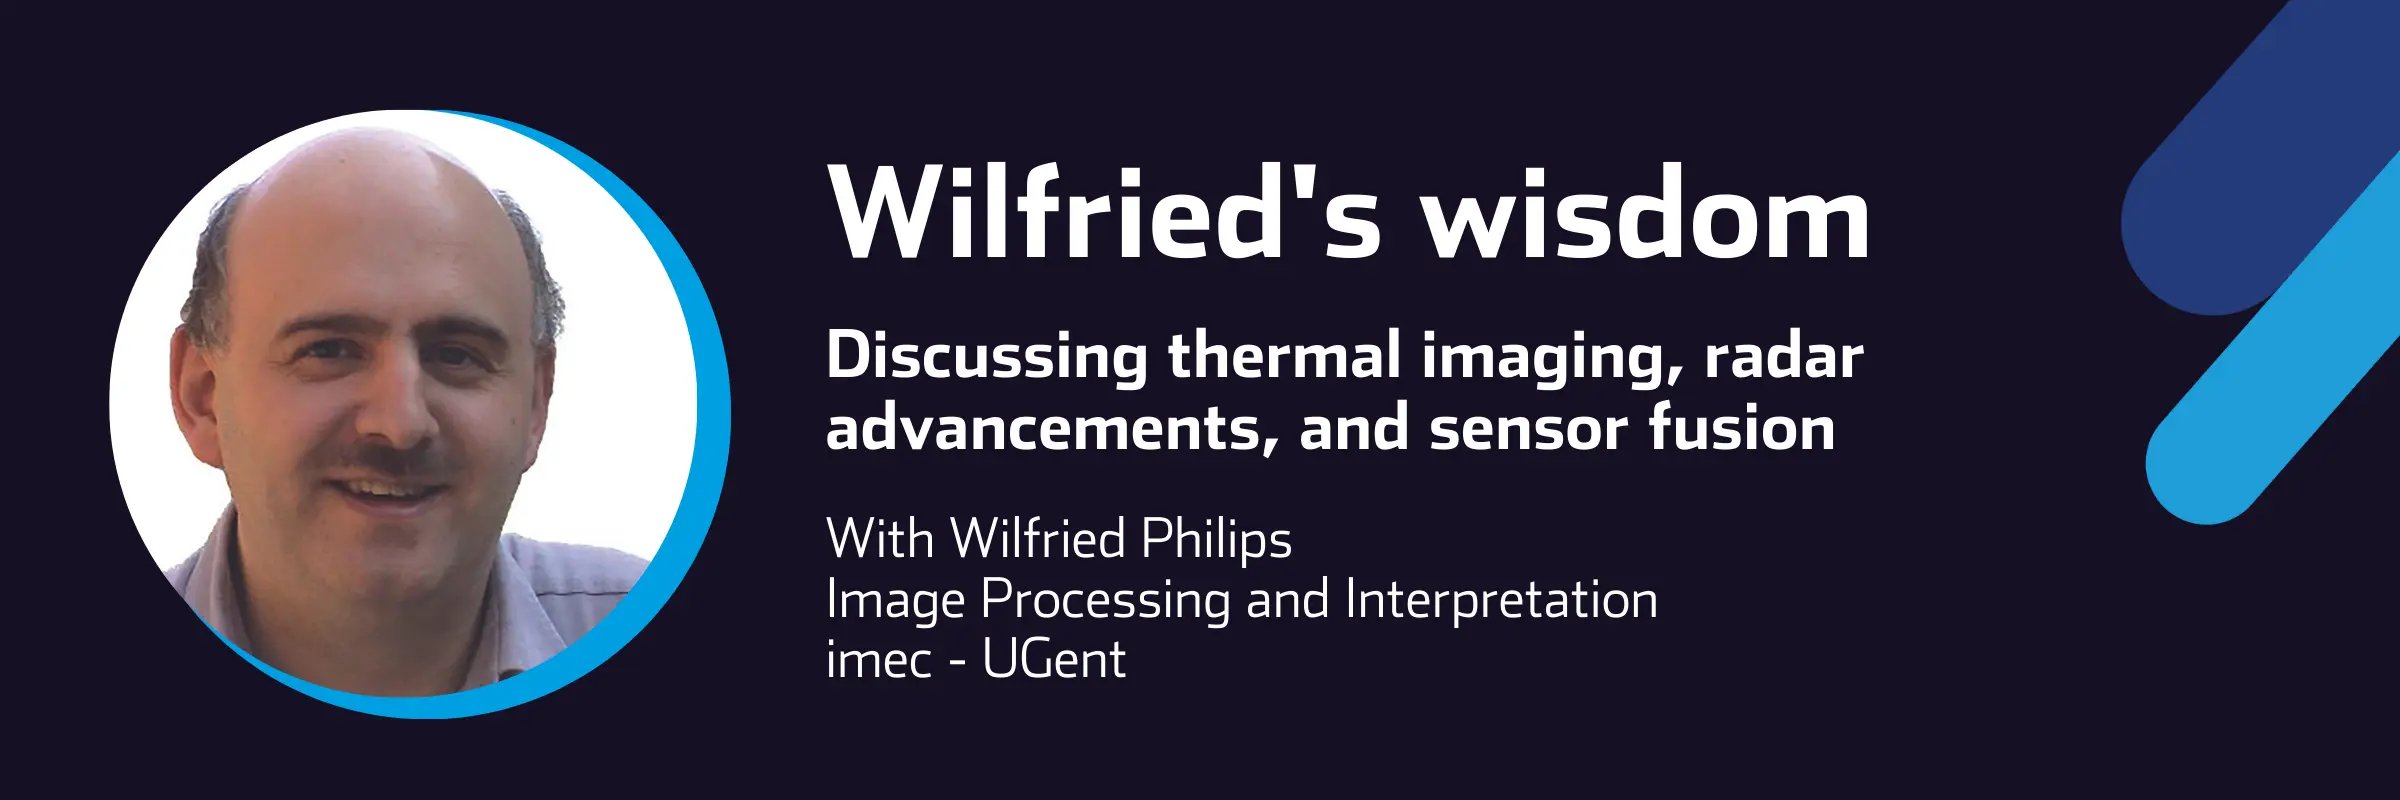 Wilfried Philips Thermal imaging